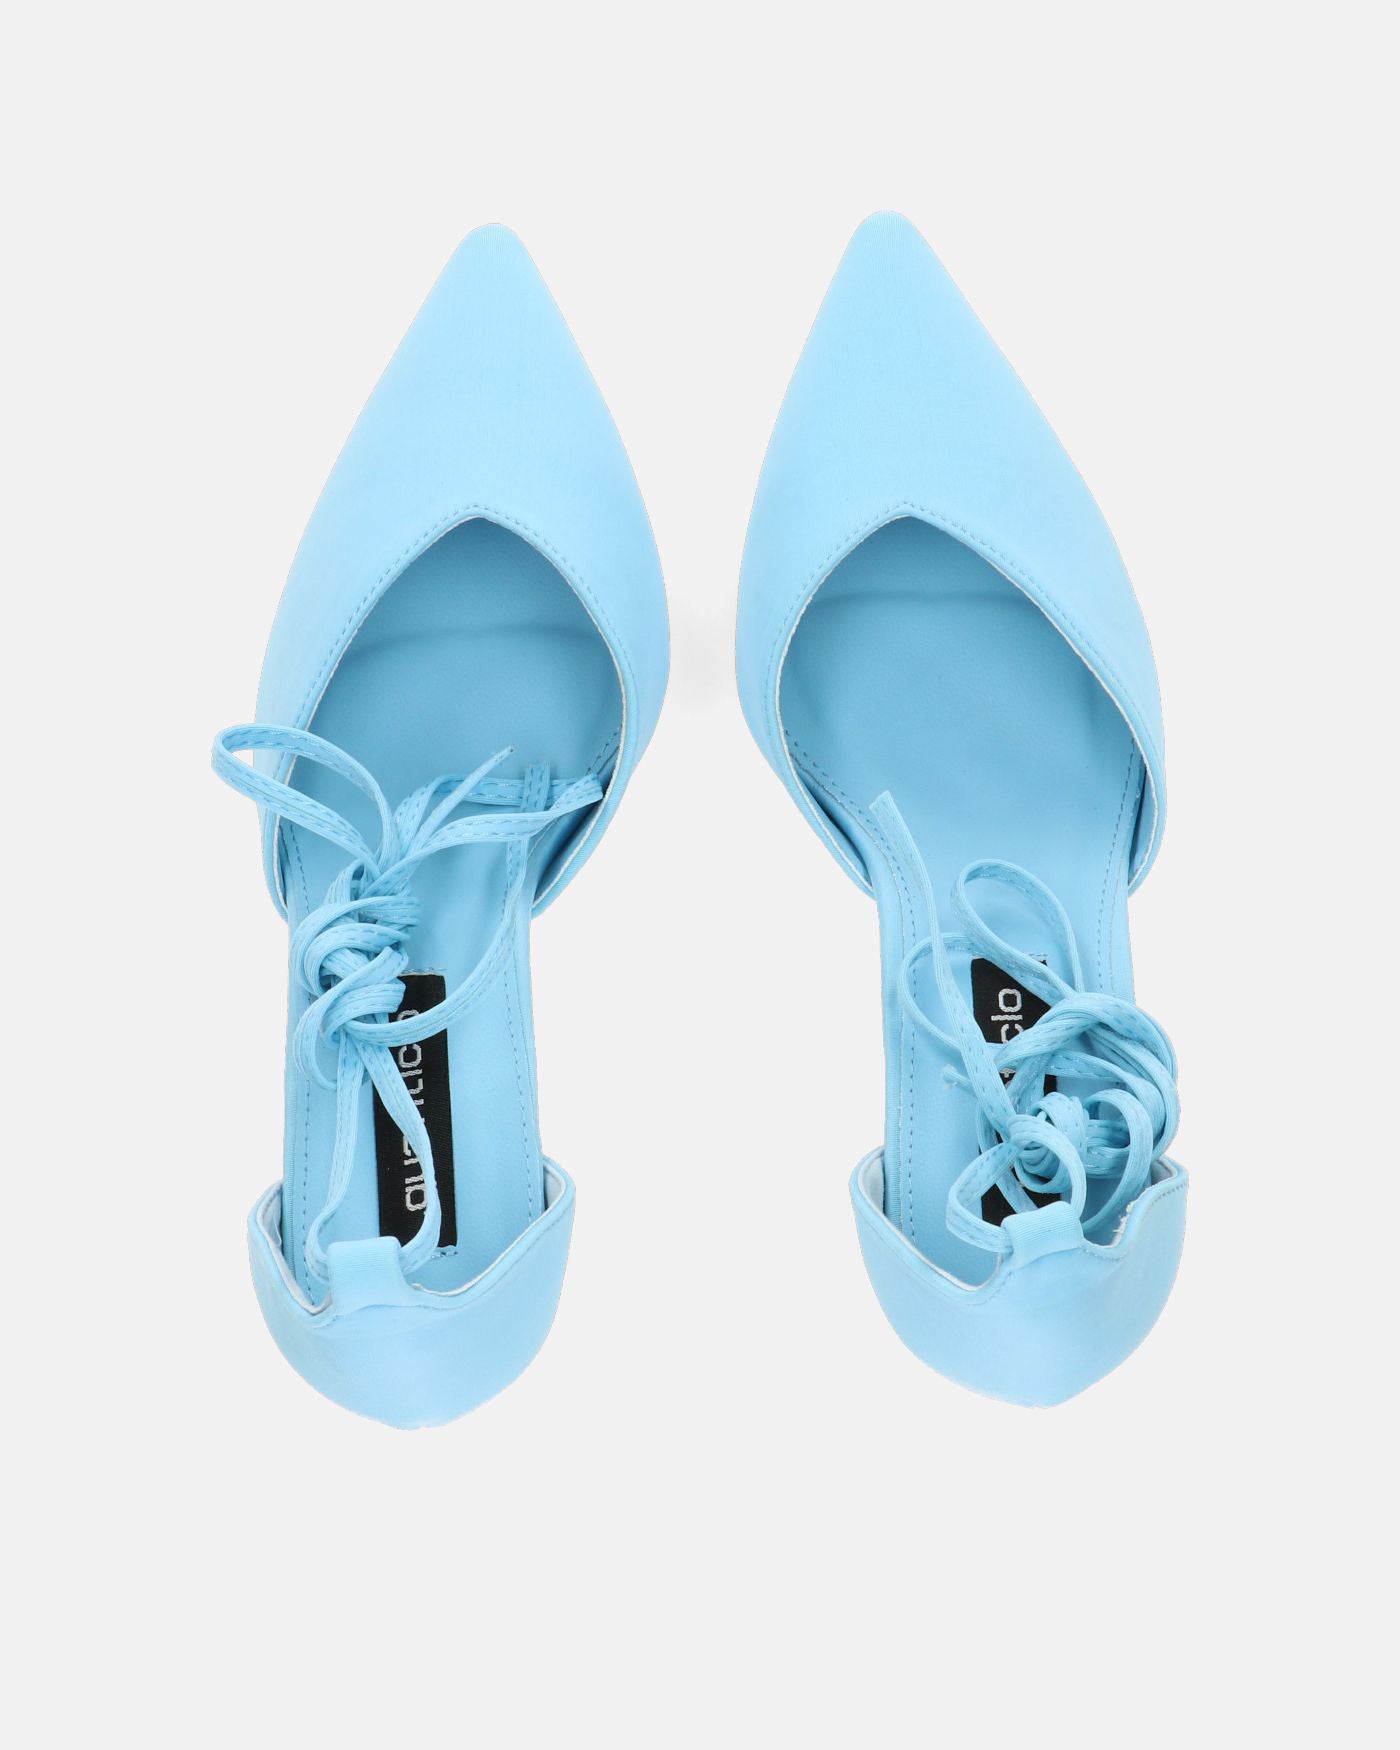 MAURA - pointed stiletto heels in light blue lycra